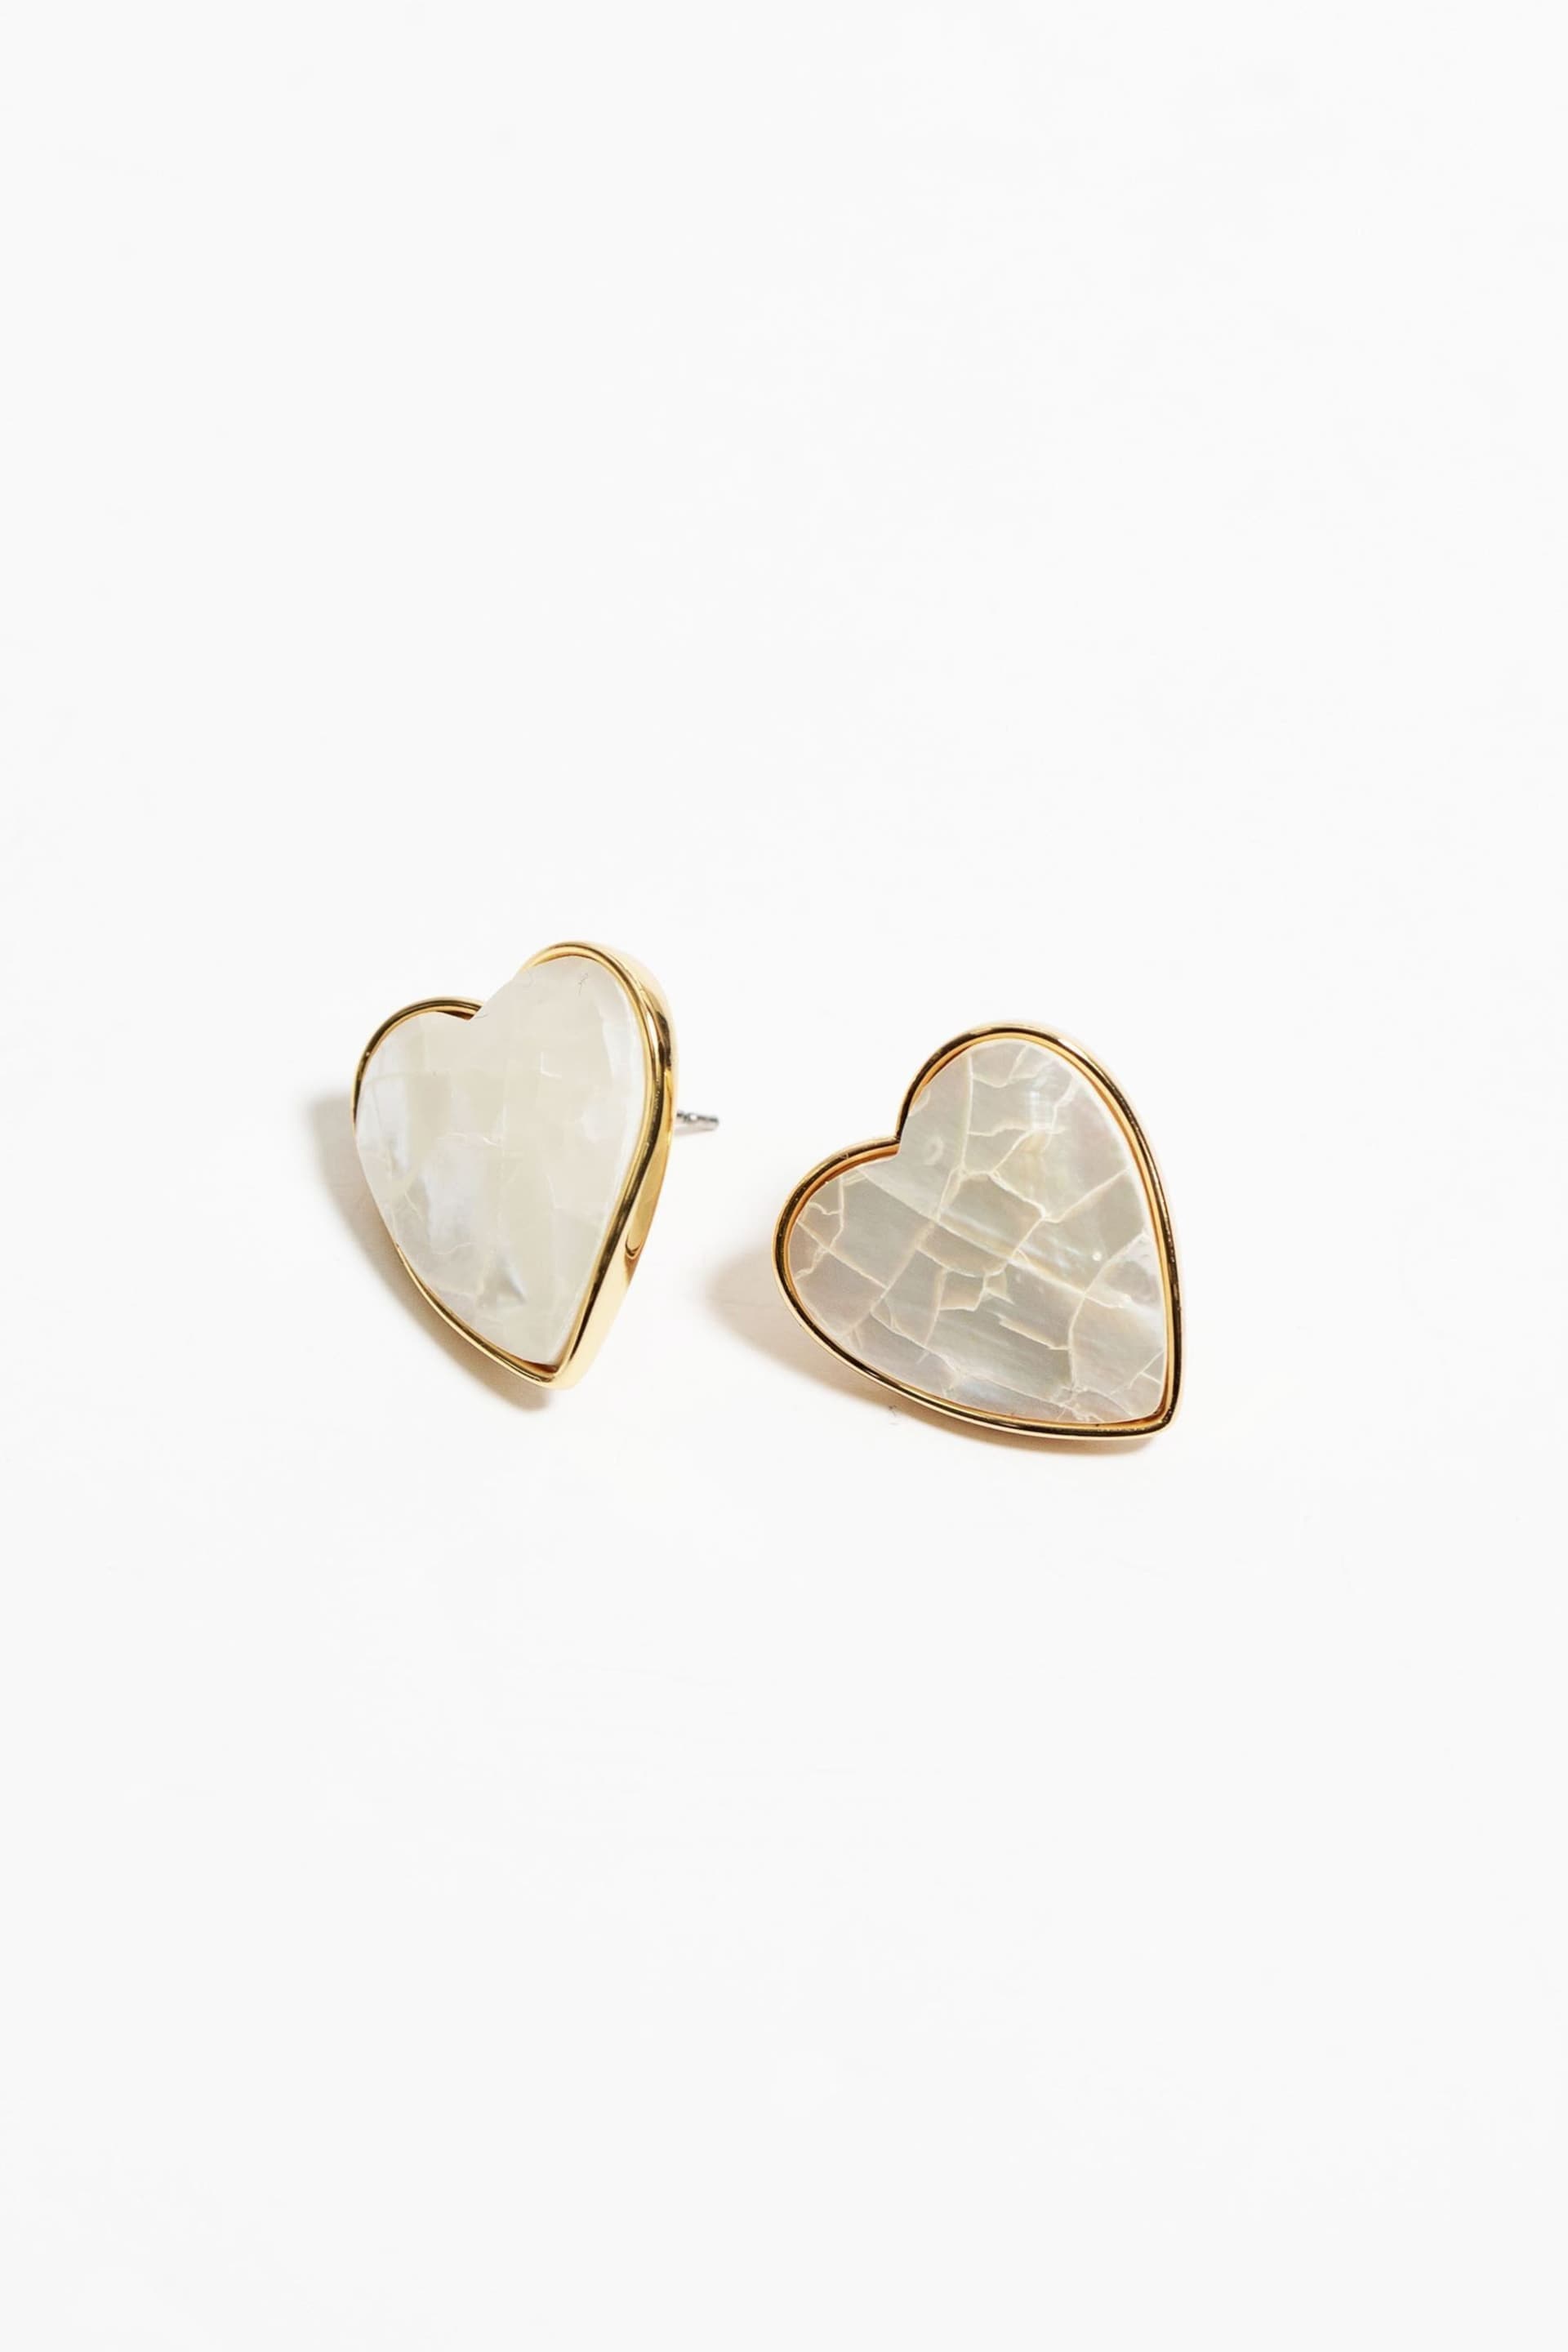 Jon Richard Gold Mother Of Pearl Heart Stud Earrings - Image 2 of 4